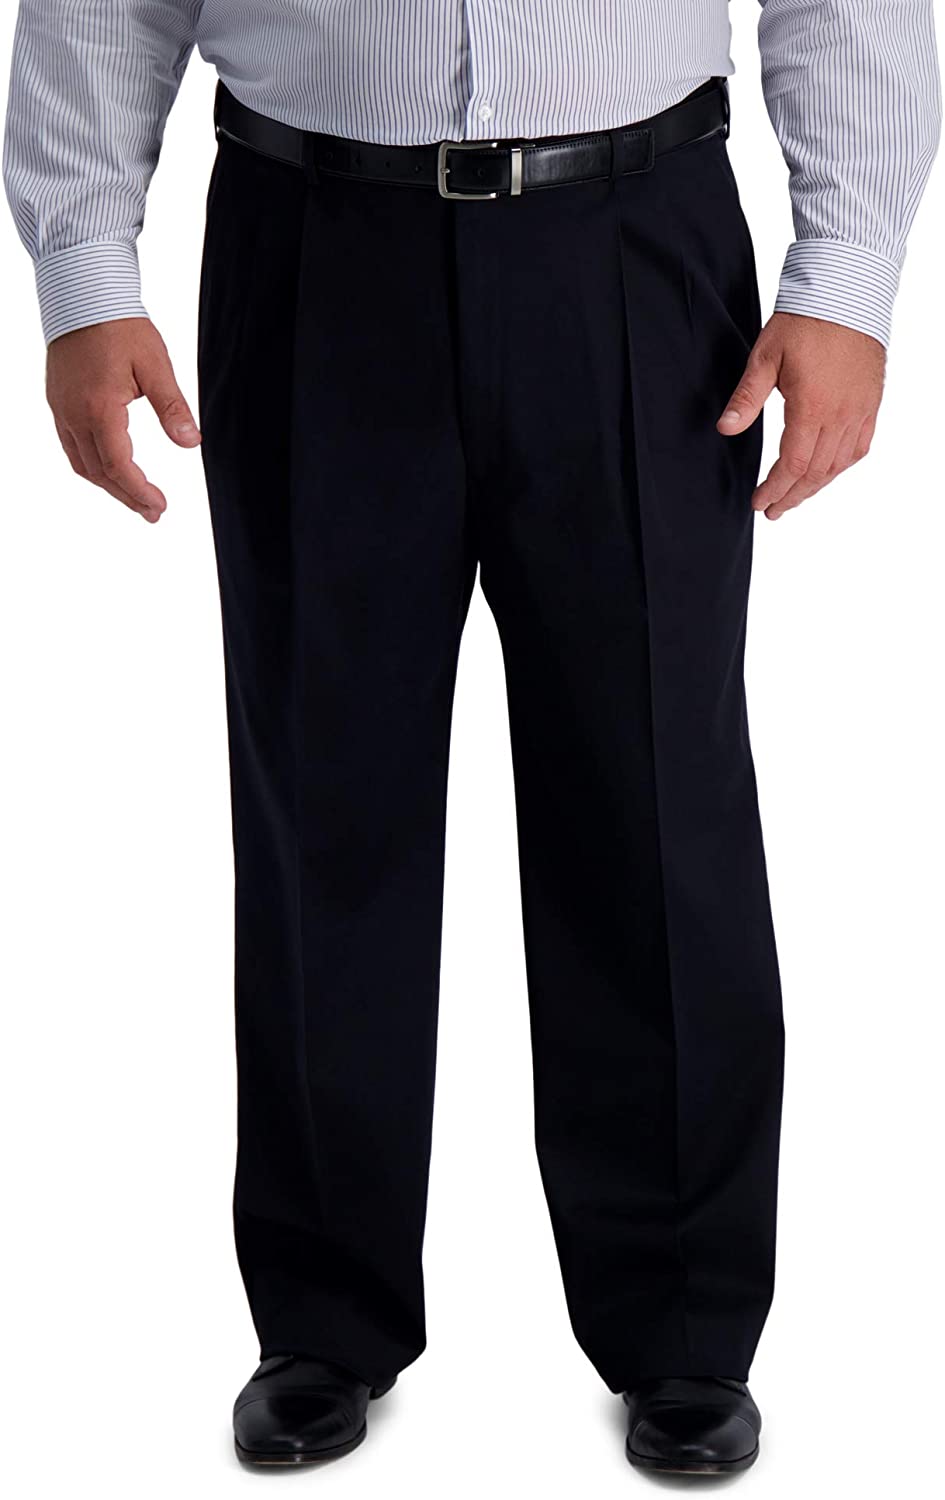 Haggar Men's Iron Free Premium Khaki Classic Fit Pleat Front Pant - Regular and Big & Tall Sizes 44W x 30L Caviar - image 1 of 6